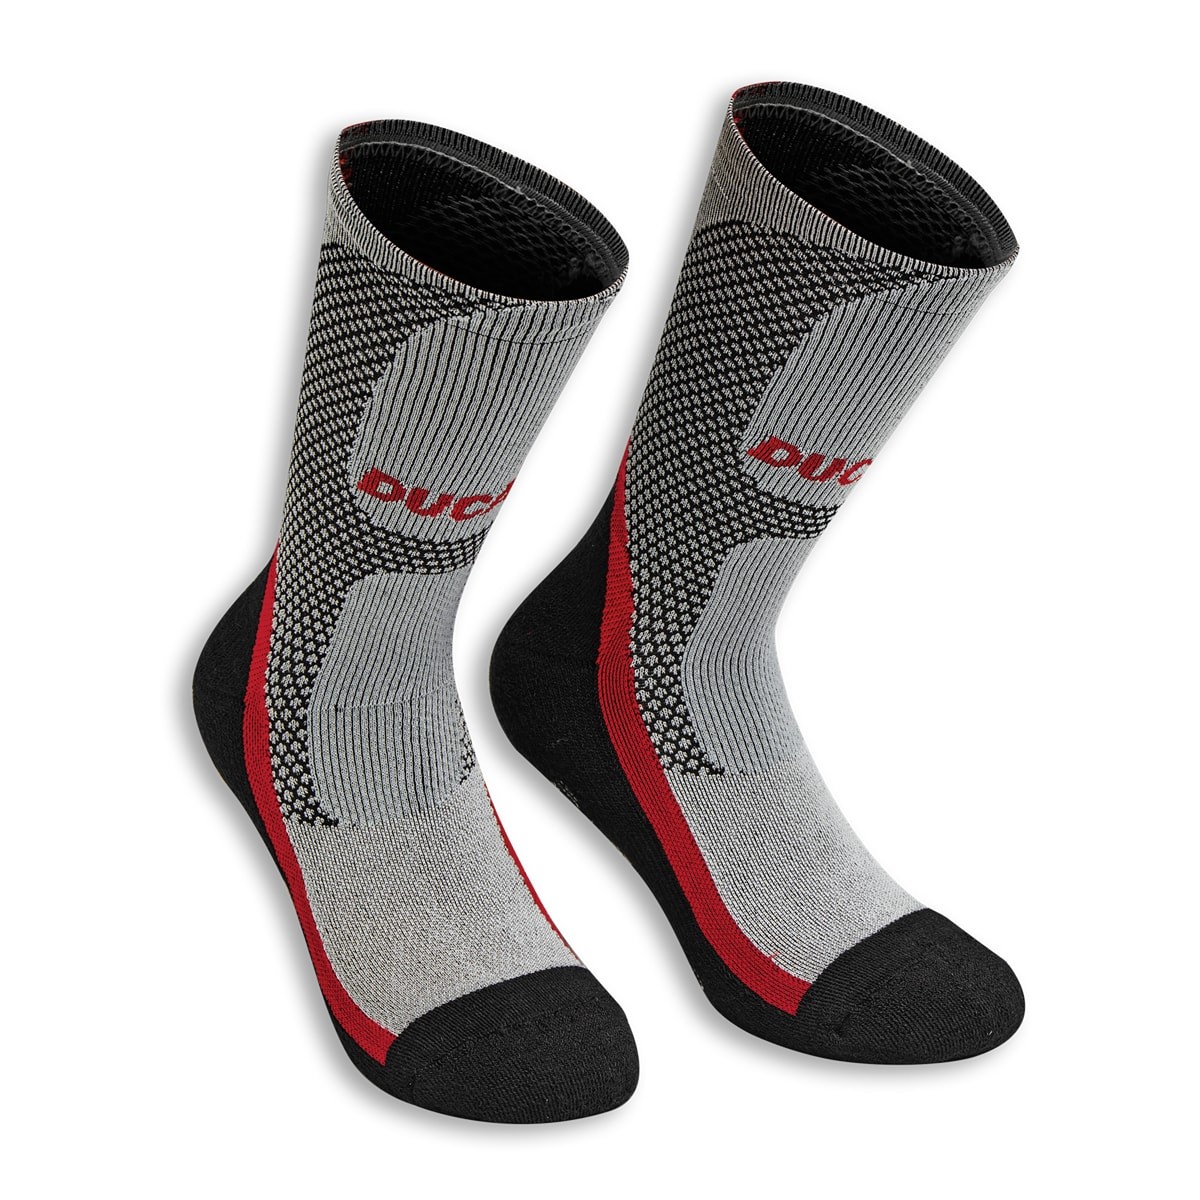 Cool Down 2 - Tech socks